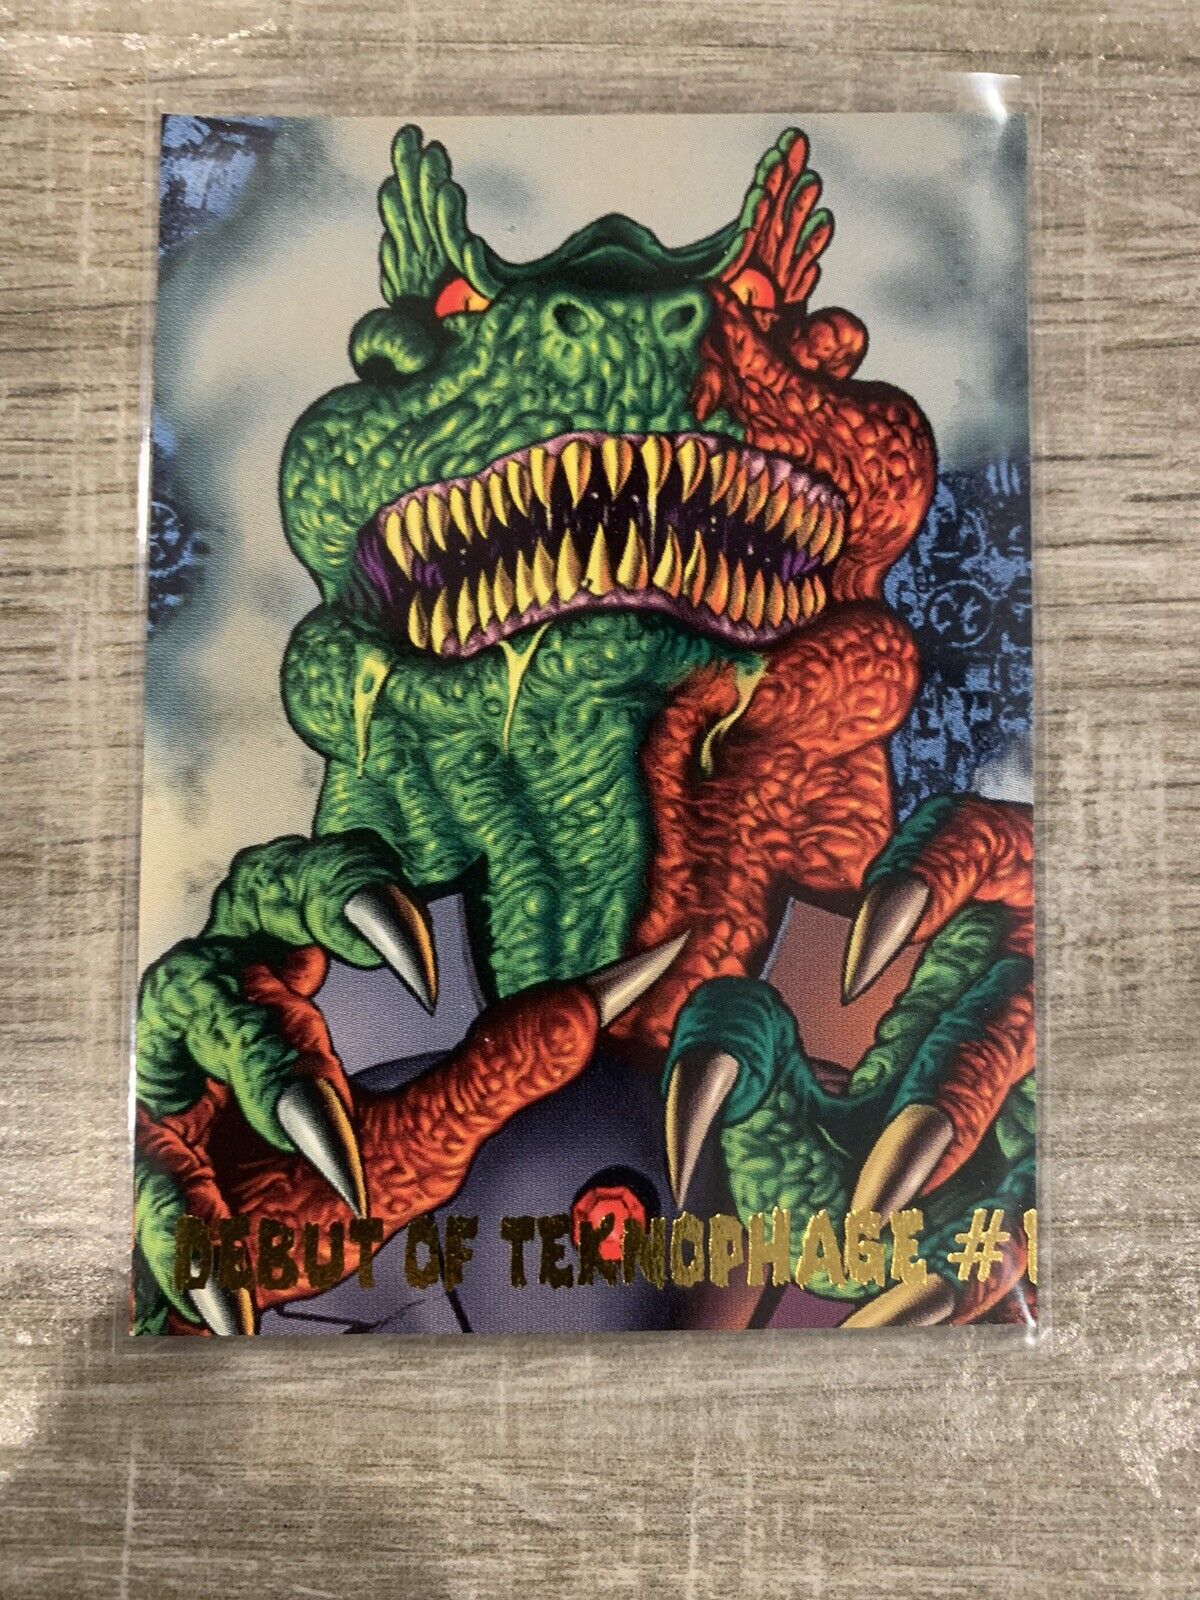 1995 Debut of Teknophage Promo Card #1